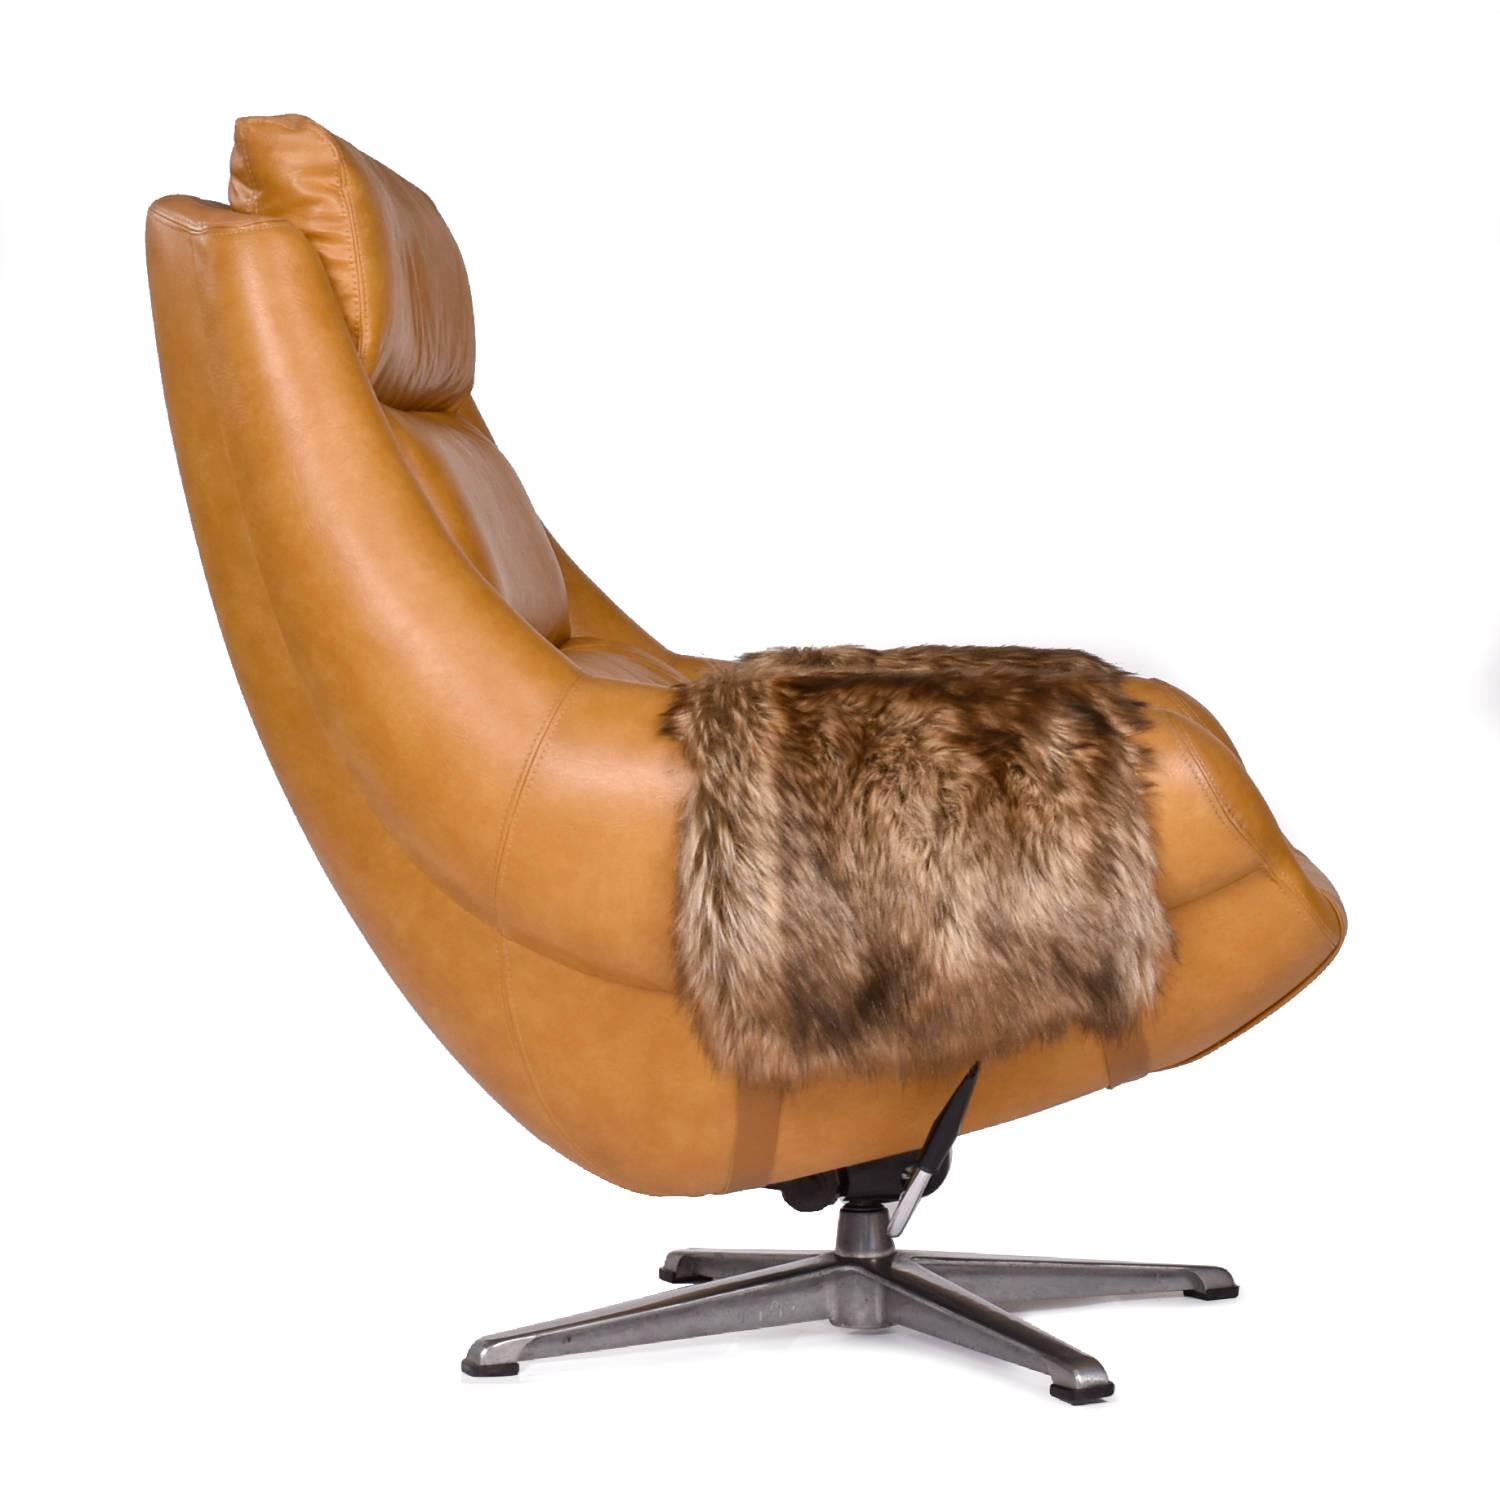 Mid-Century Modern The Moderns Modern 1970s Swivel Pod Chair Recliner with Faux Fur Arms (fauteuil pivotant avec accoudoirs en fausse fourrure) en vente